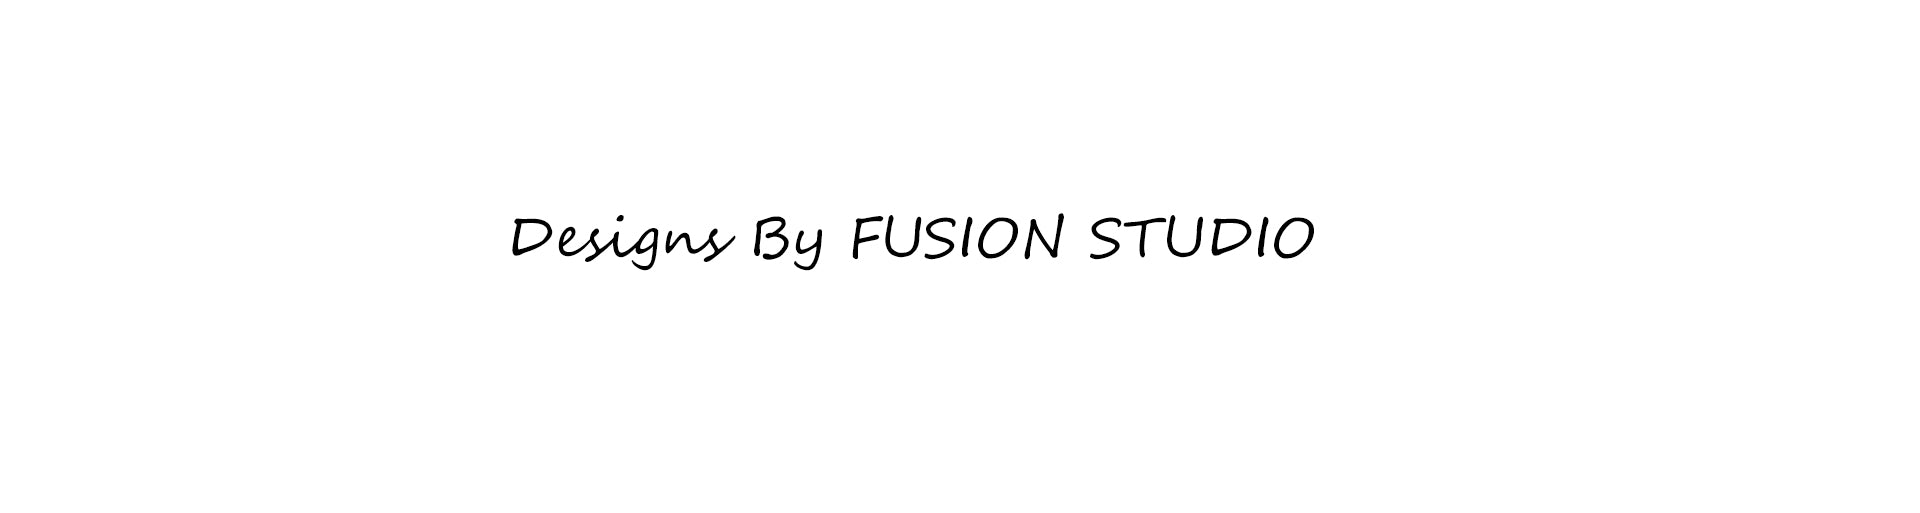 FUSION STUDIO